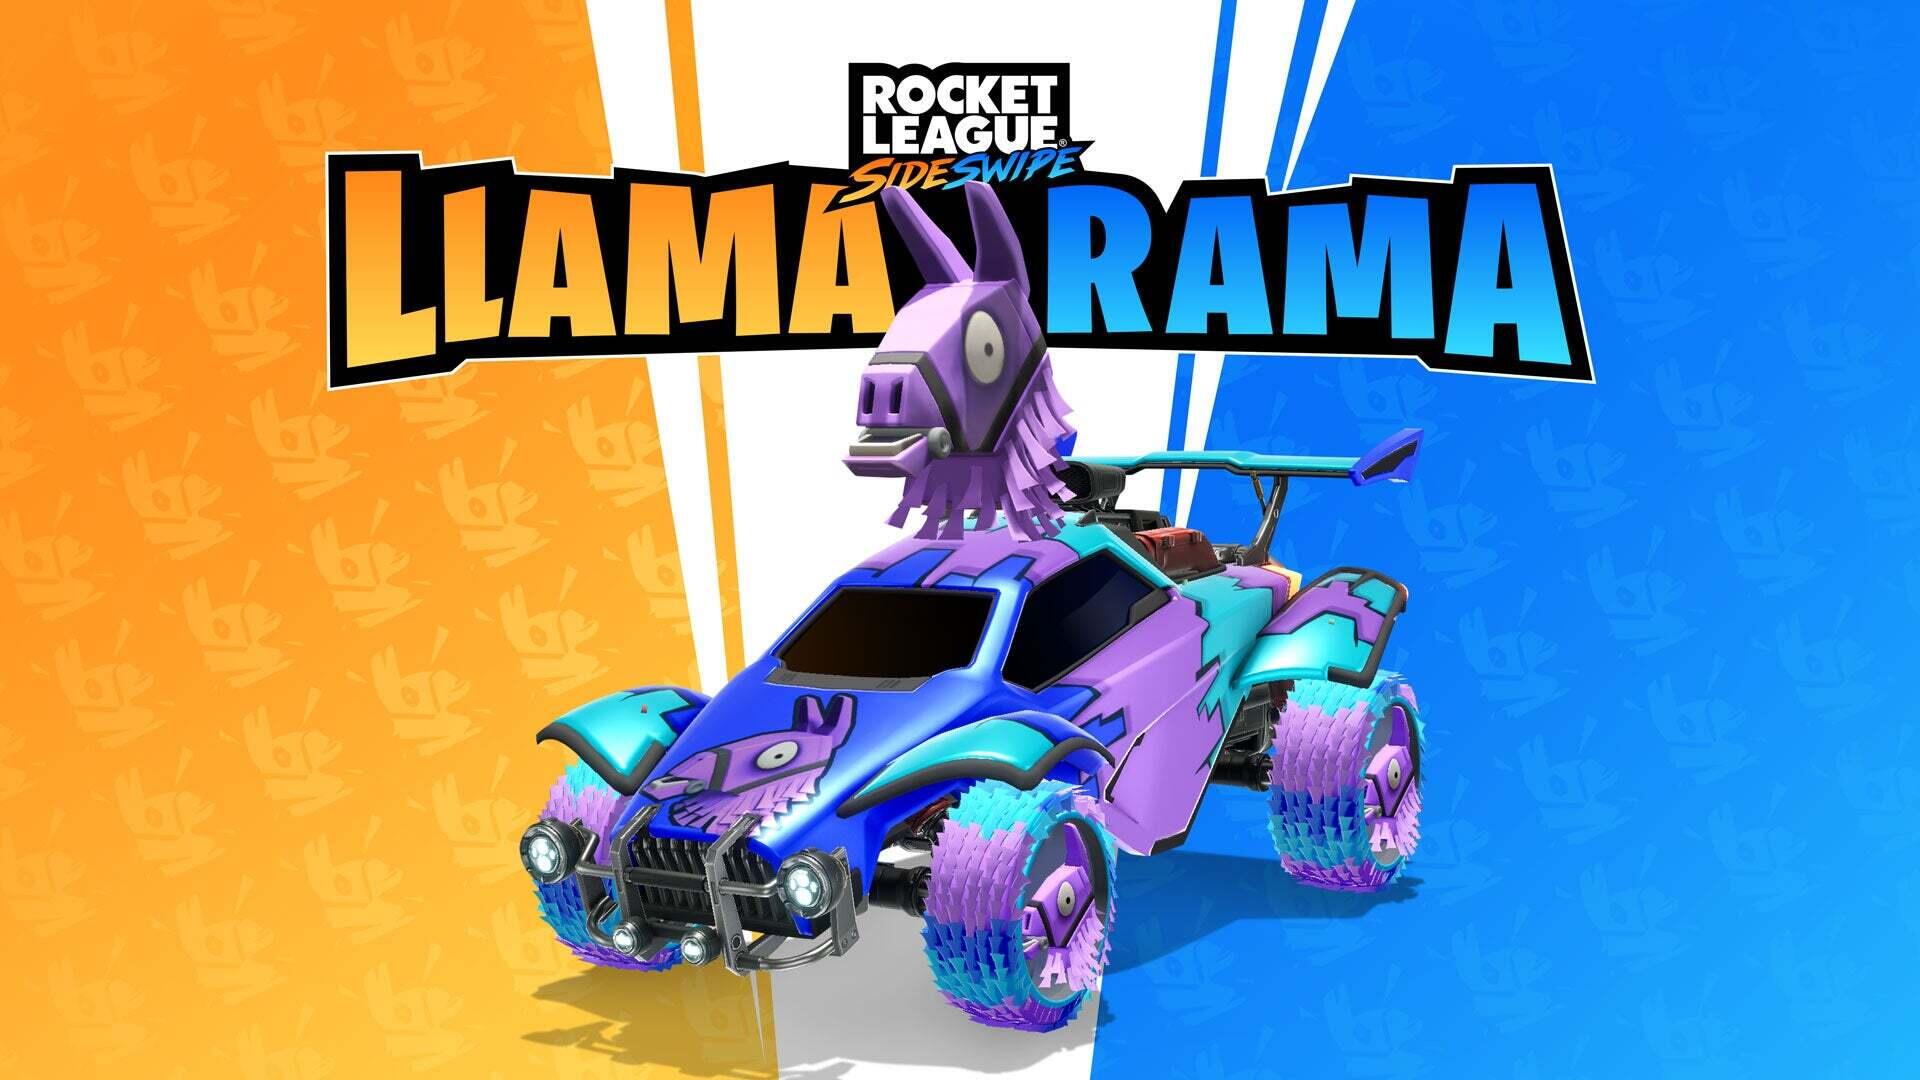 Domine o Llama-Rama no Rocket League Sideswipe Image